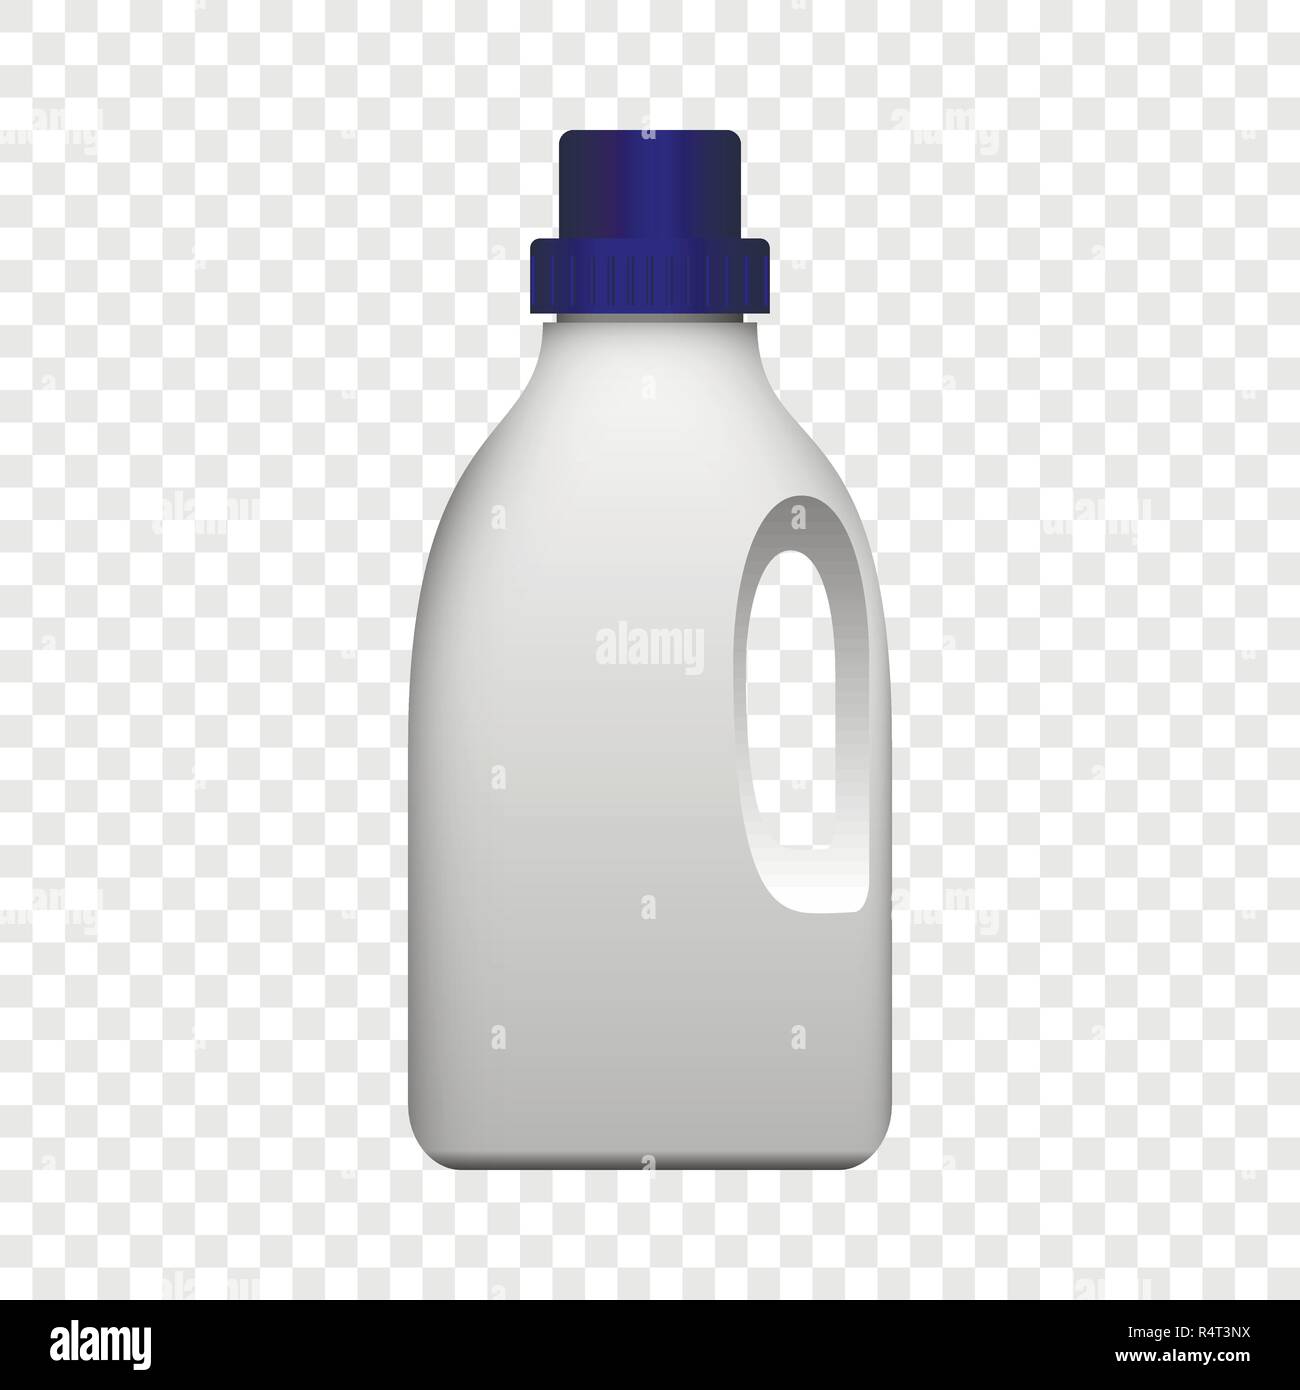 Washing cleaner mockup. Realistic illustration of washing cleaner vector mockup for on transparent background Stock Vector